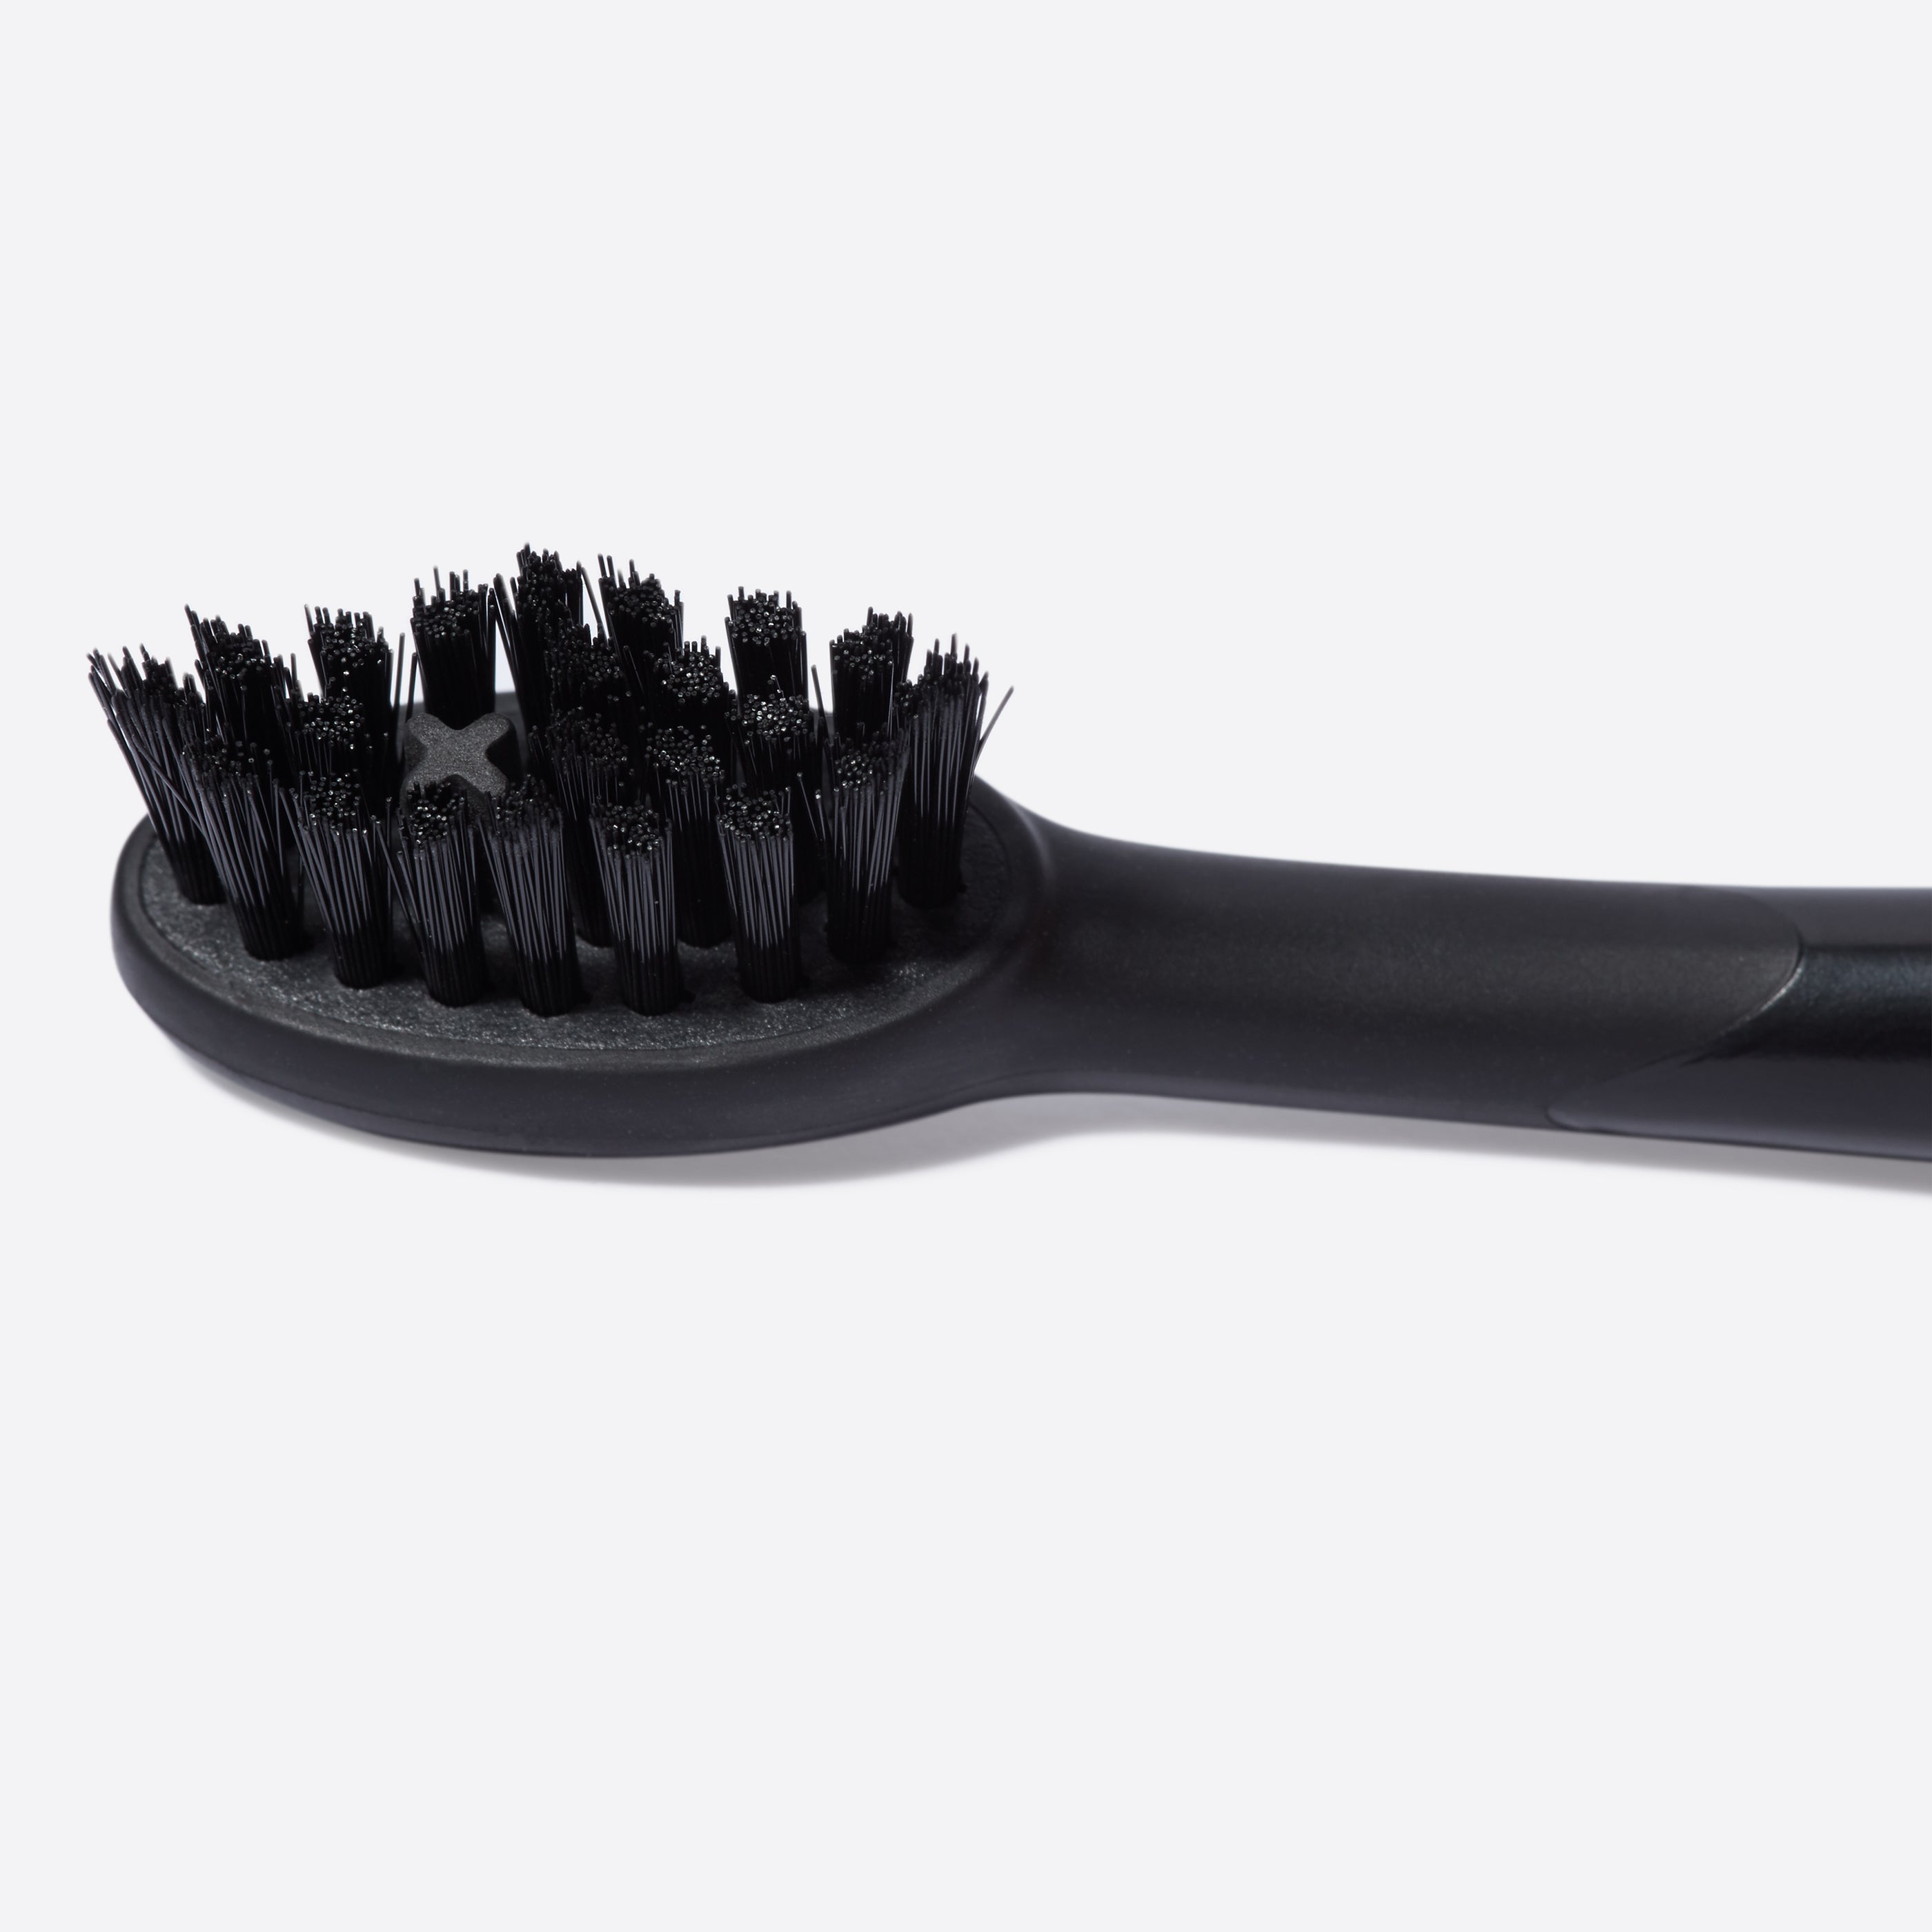 Sonic XP Toothbrush –  black